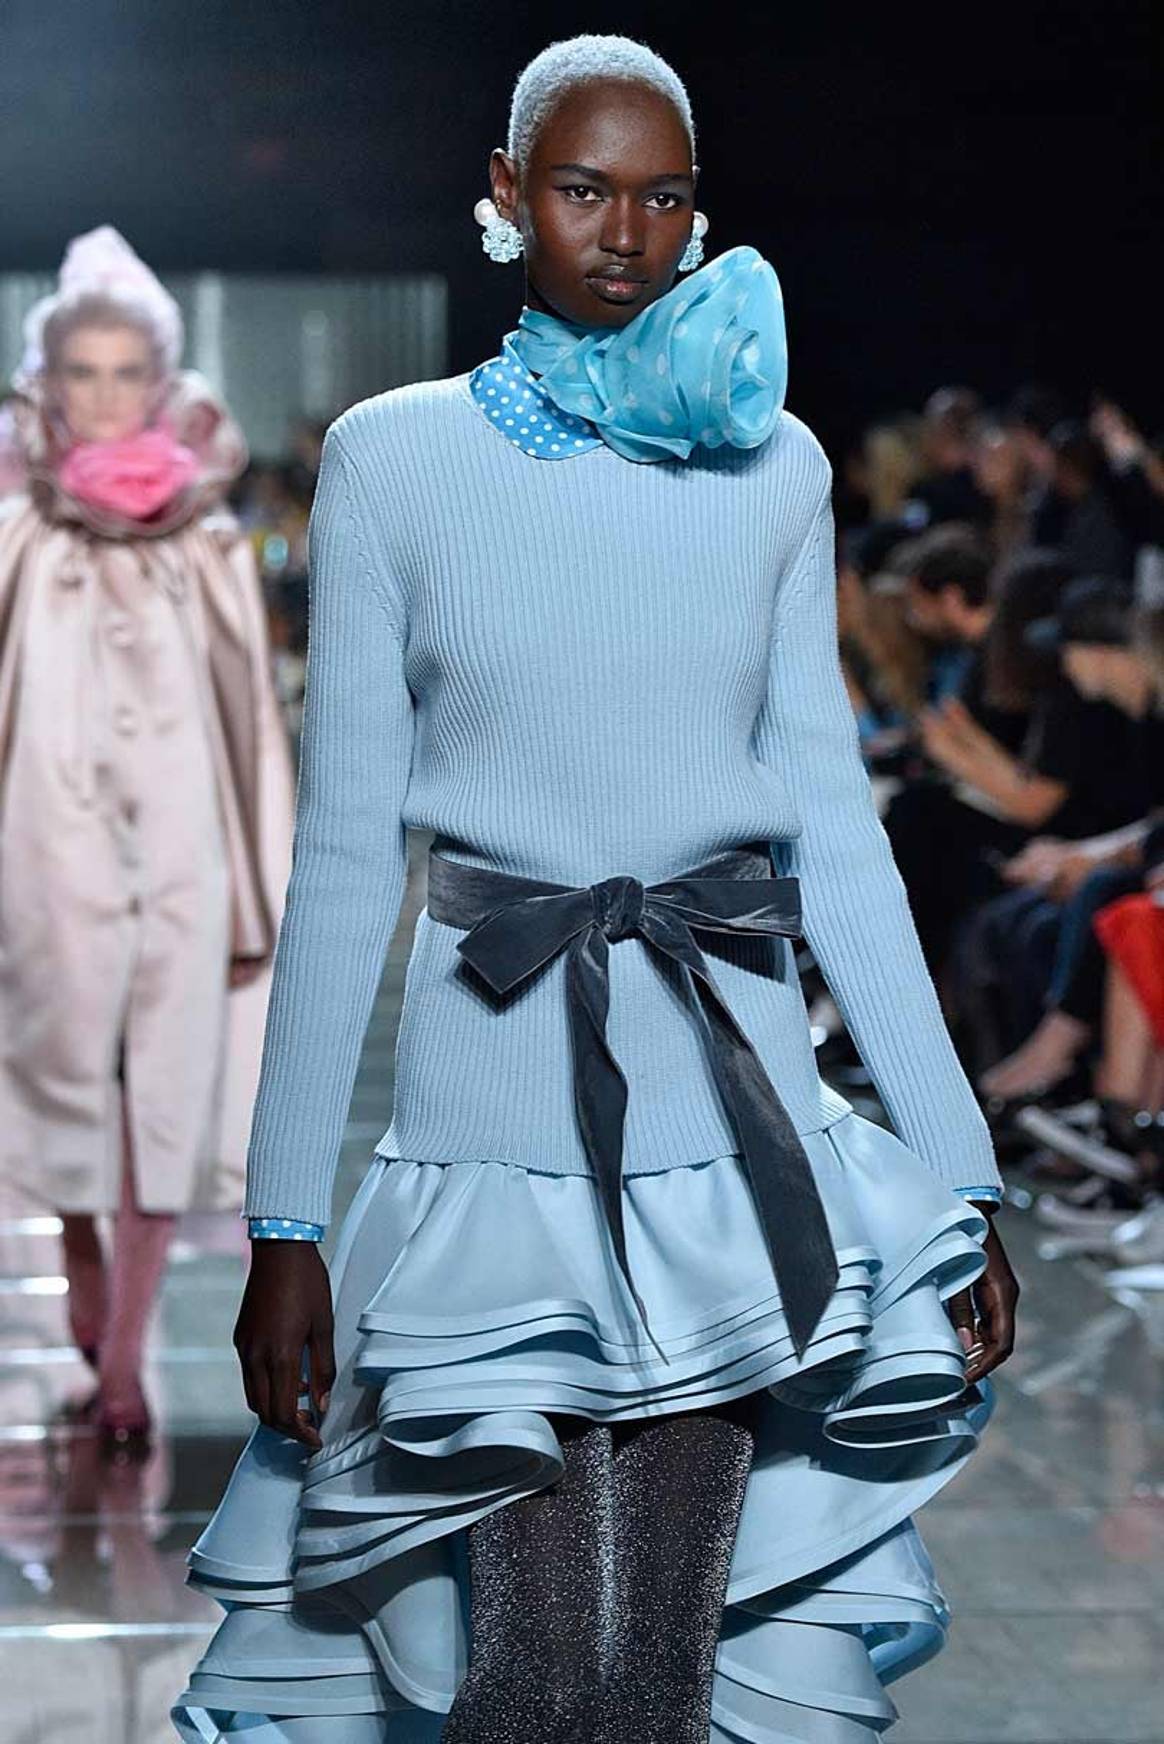 Marc Jacobs brings back 'polished' to NY Fashion Week